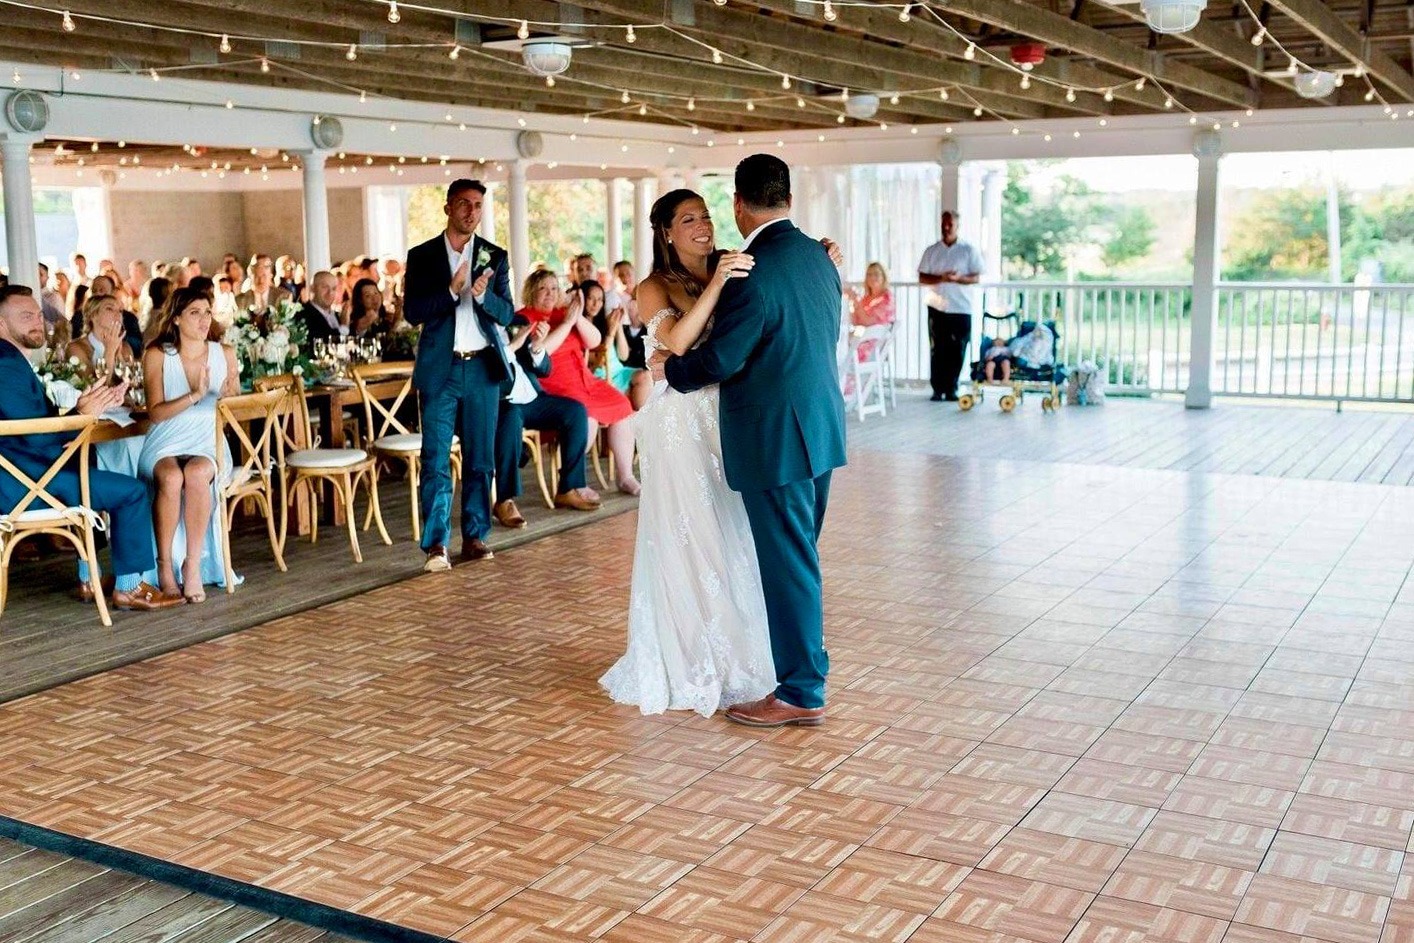 Dancing at a wedding on an Oak style dance floor